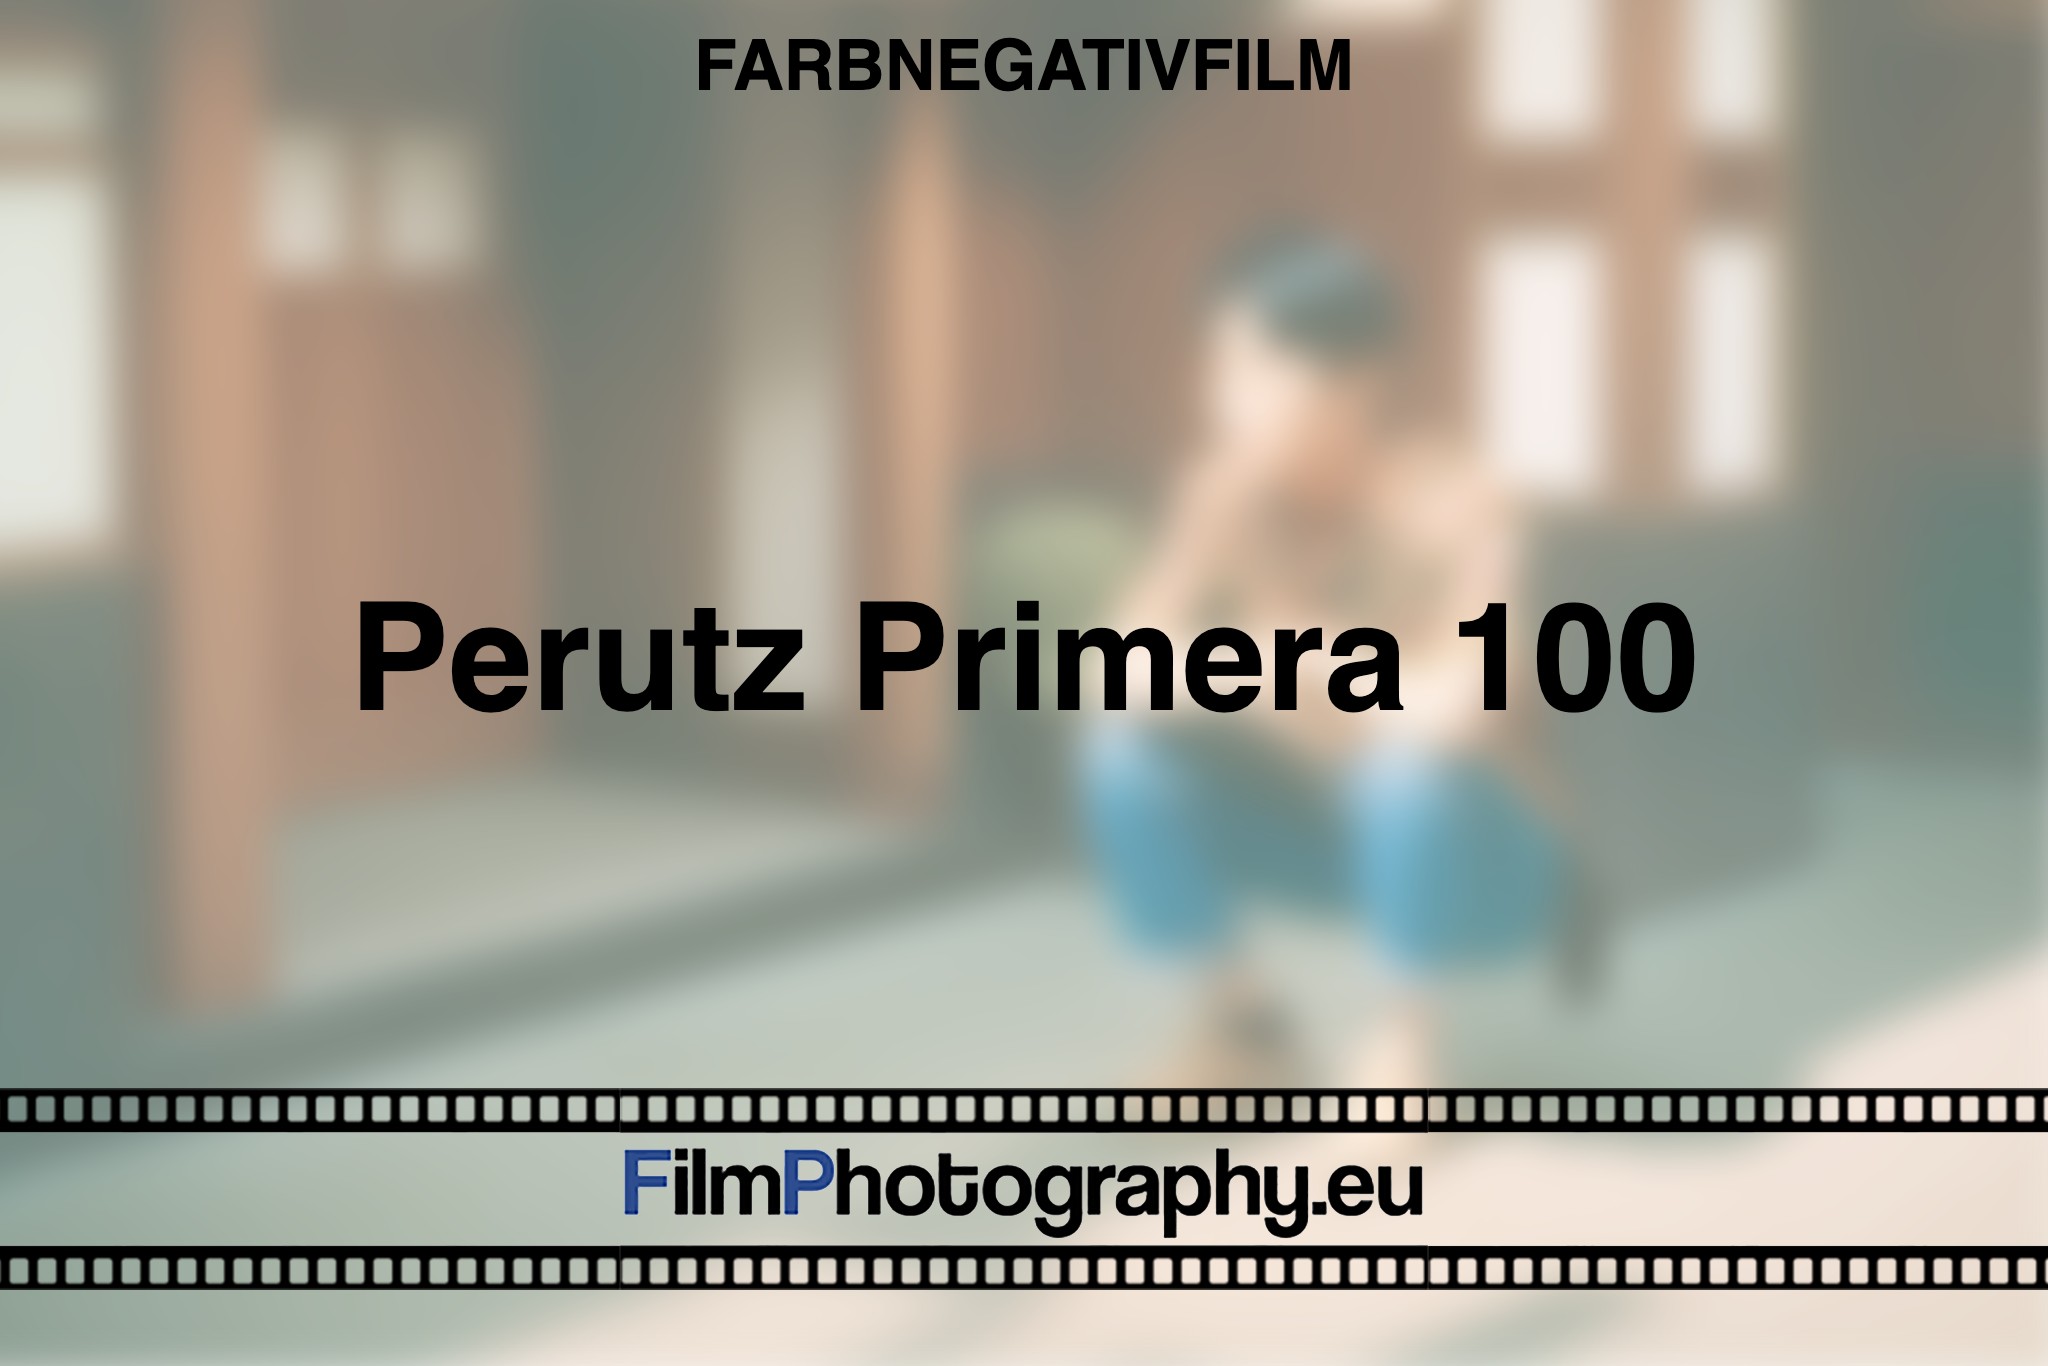 perutz-primera-100-farbnegativfilm-bnv